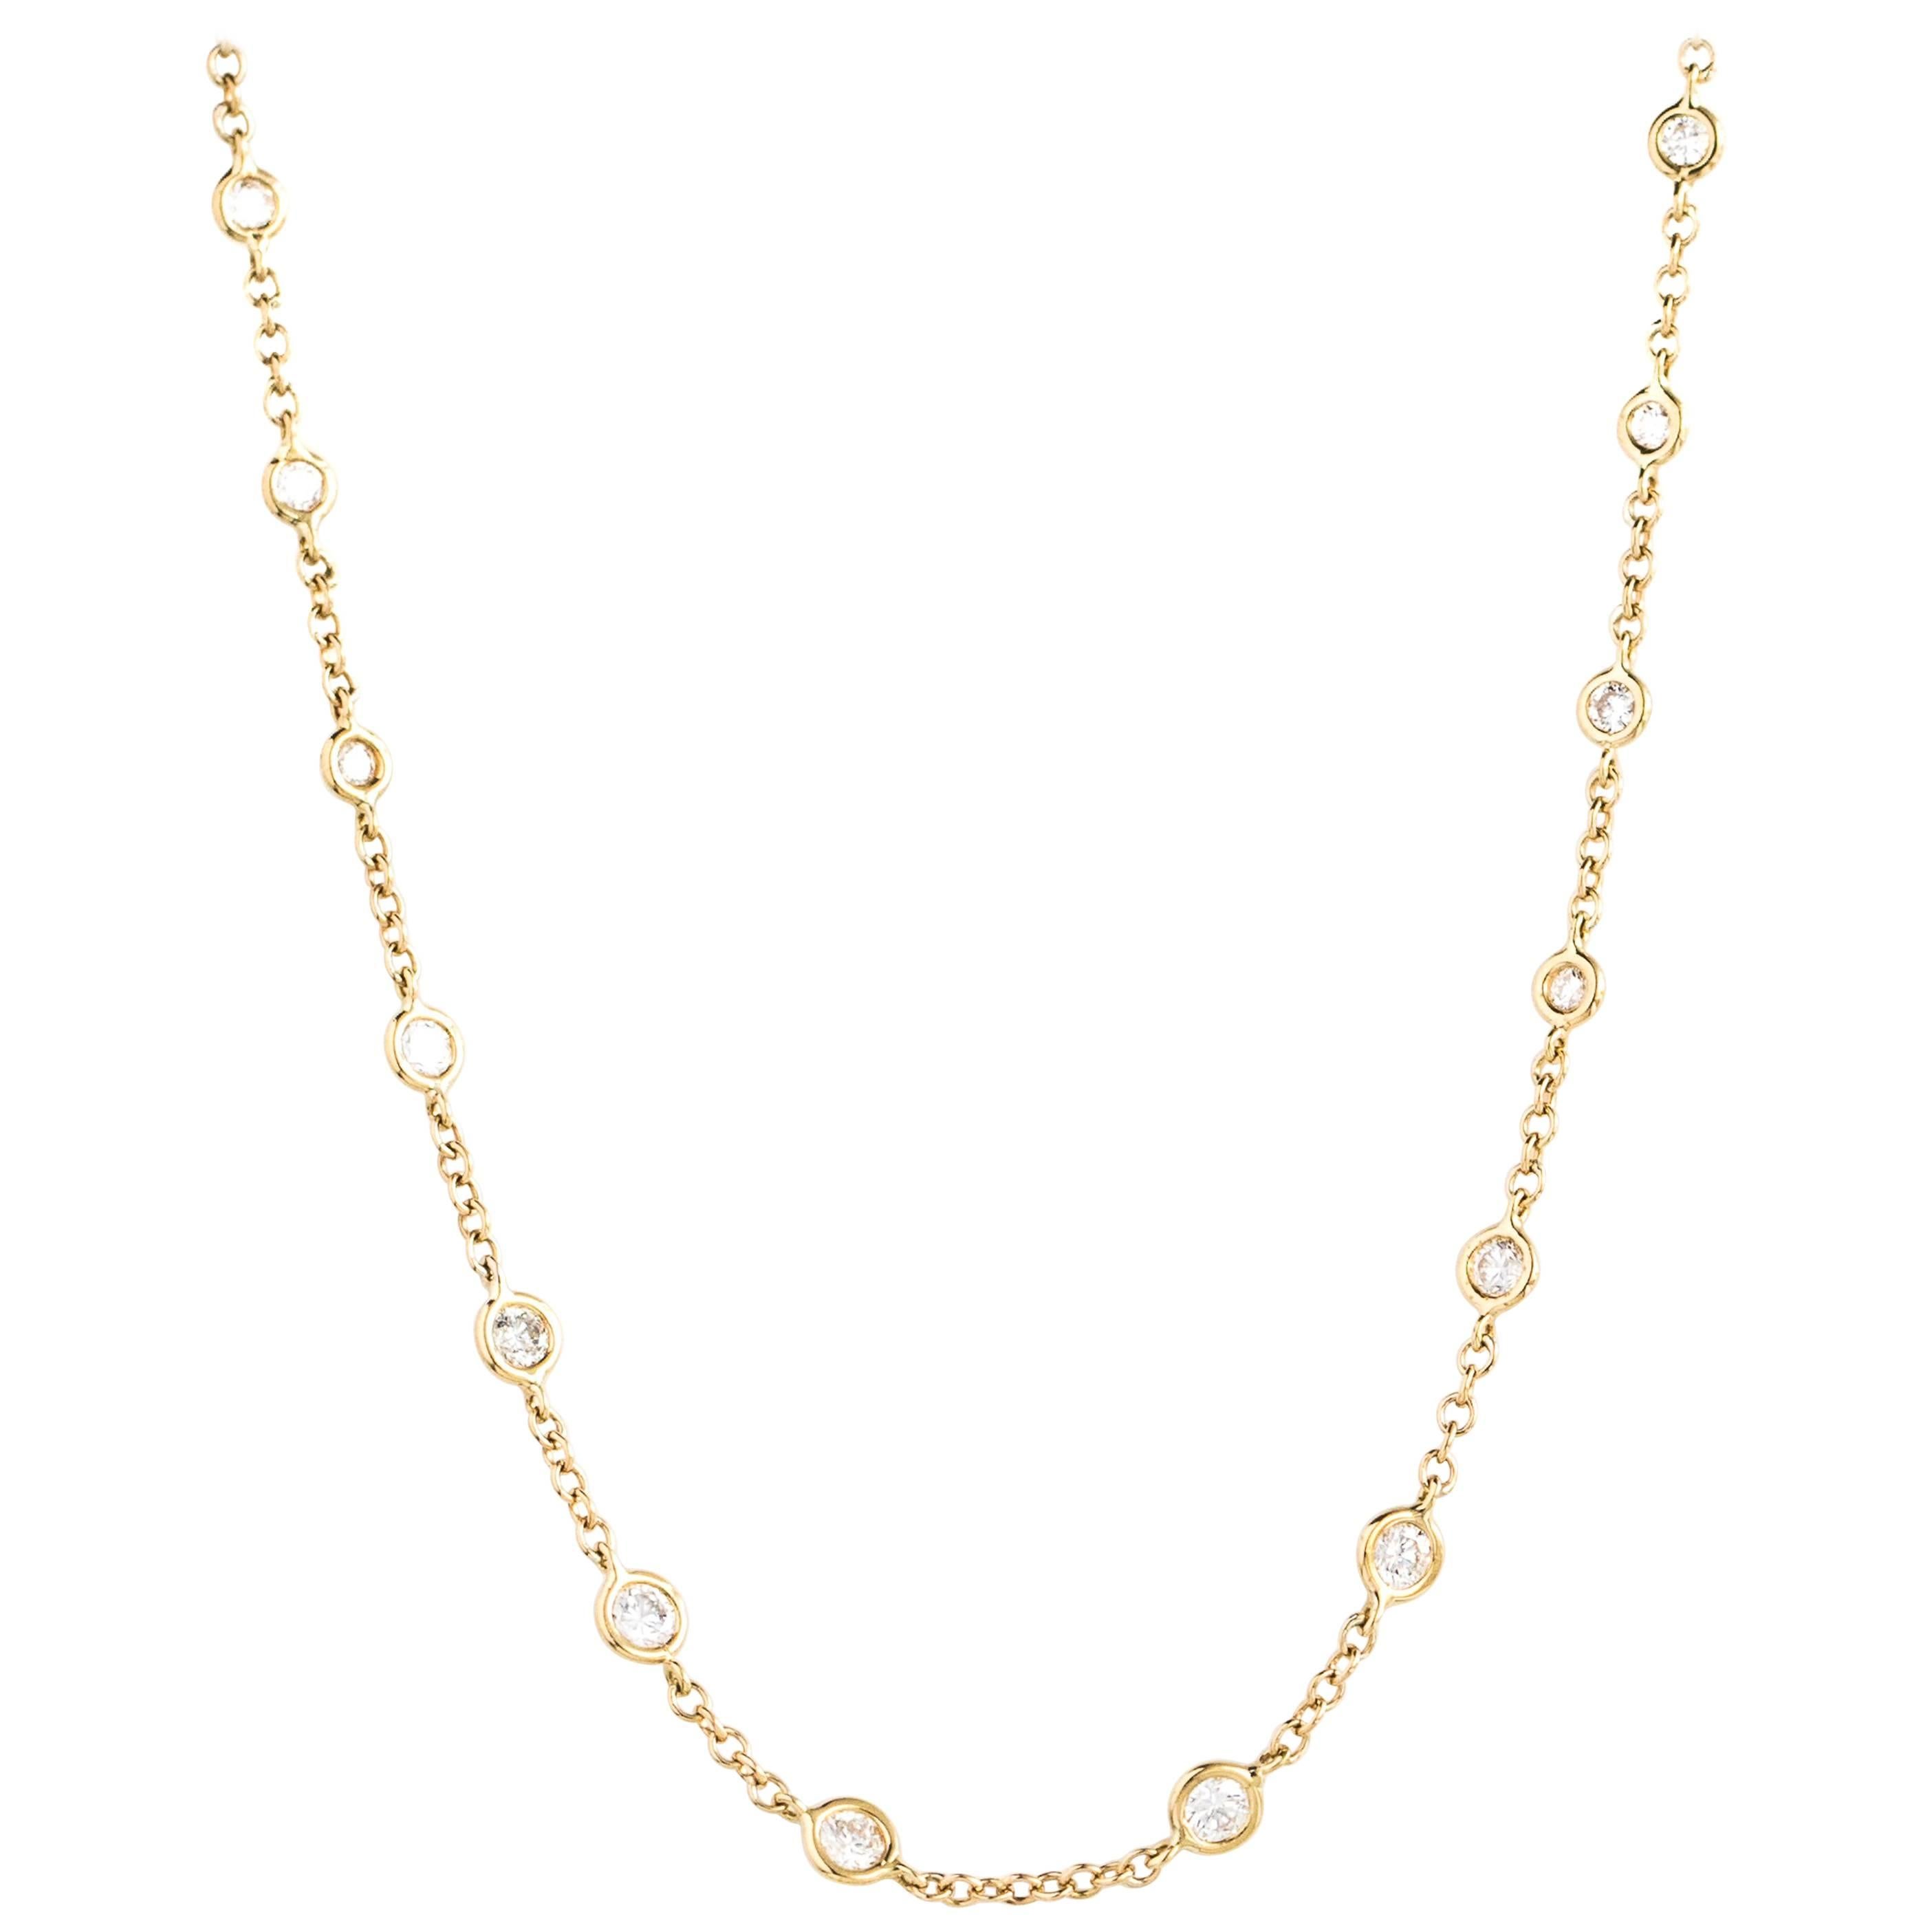 2 Carat Bezel Set Diamond Link Necklace in 14 Karat Yellow Gold